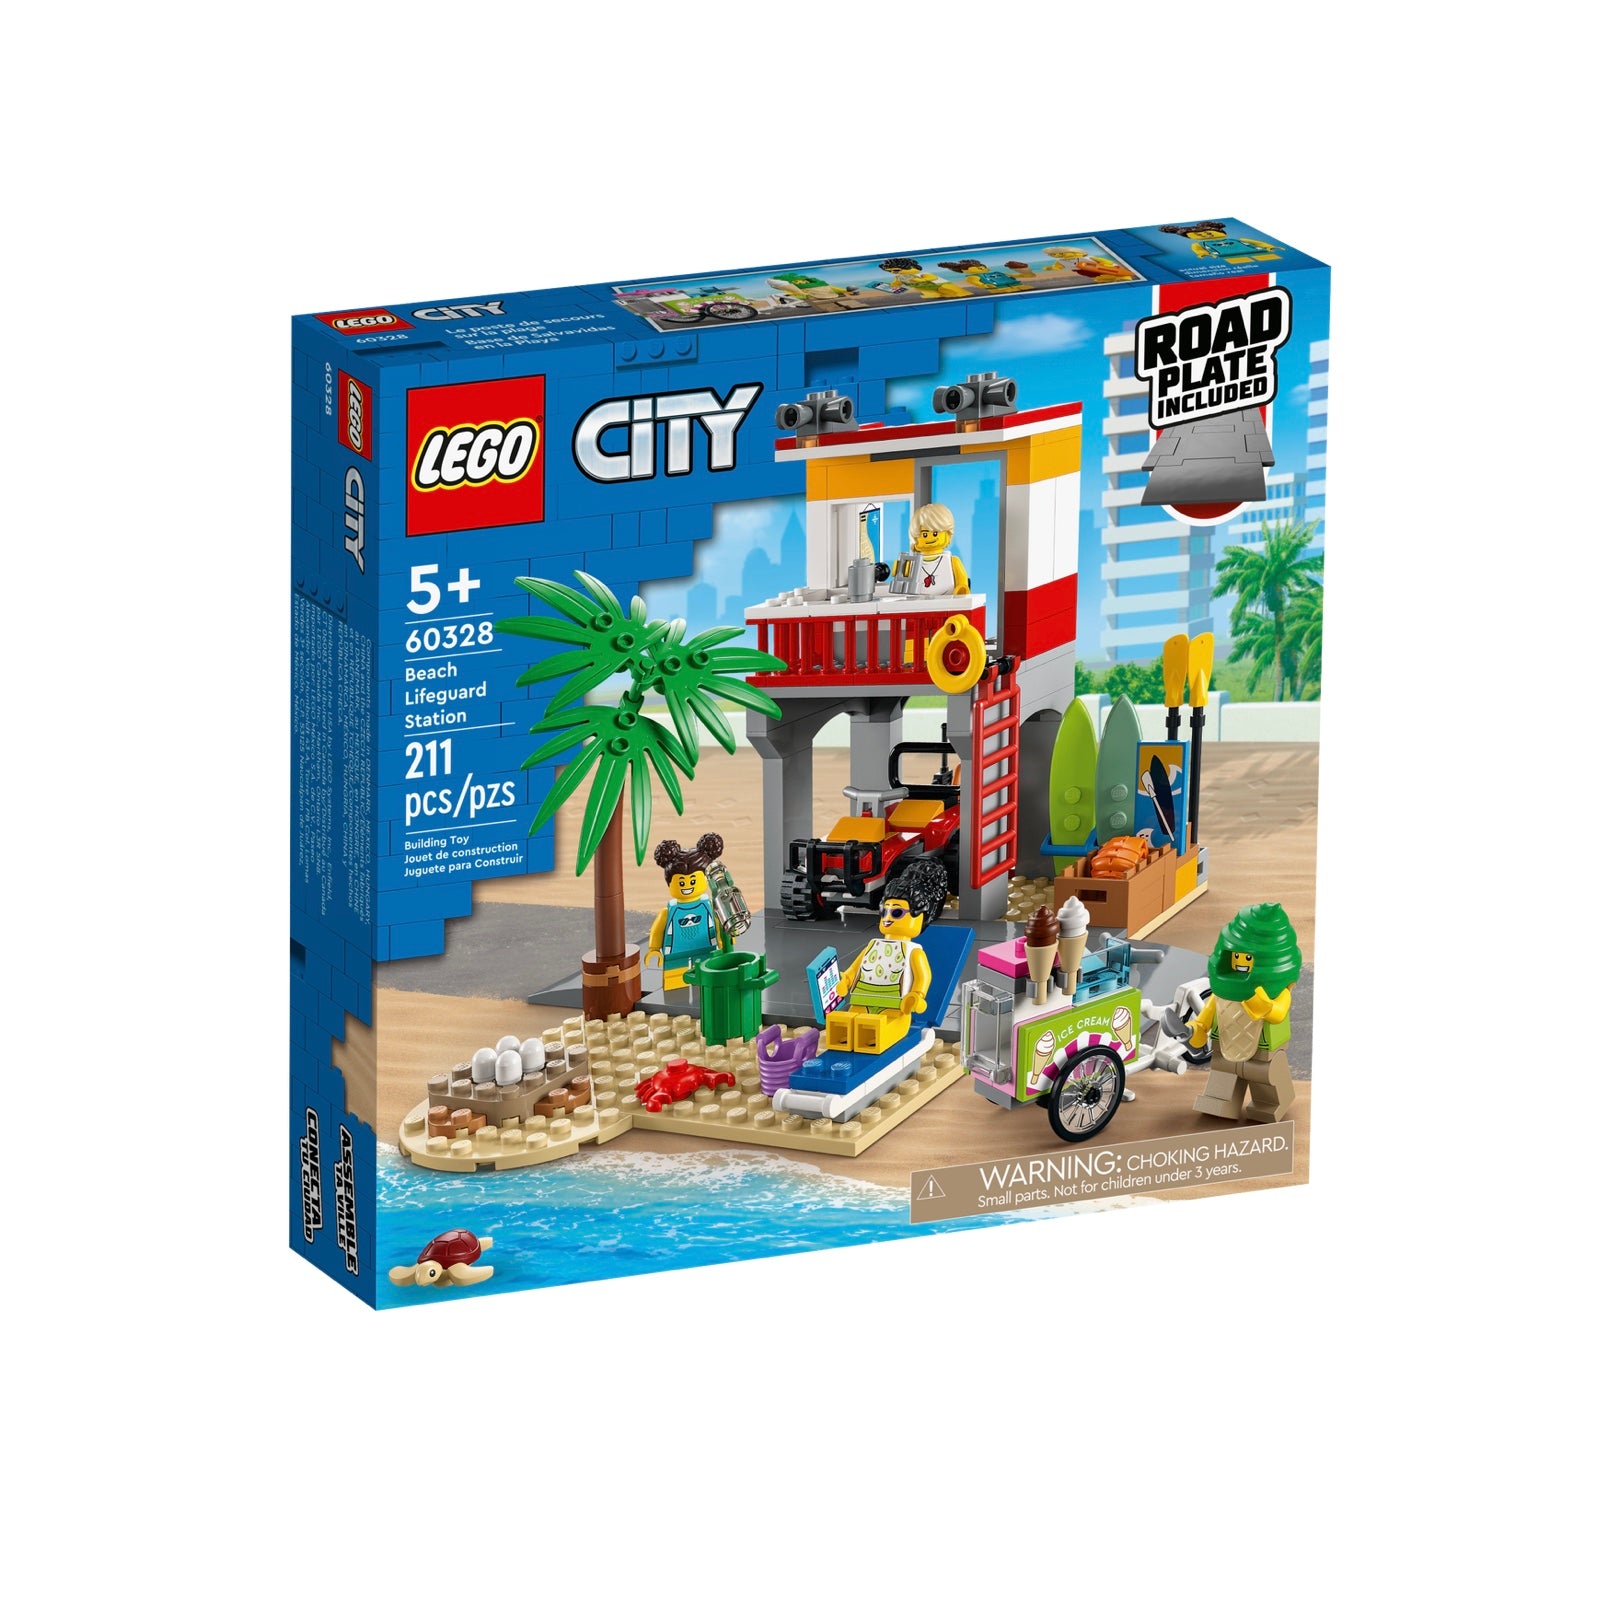 60328 City Beach Lifeguard Station